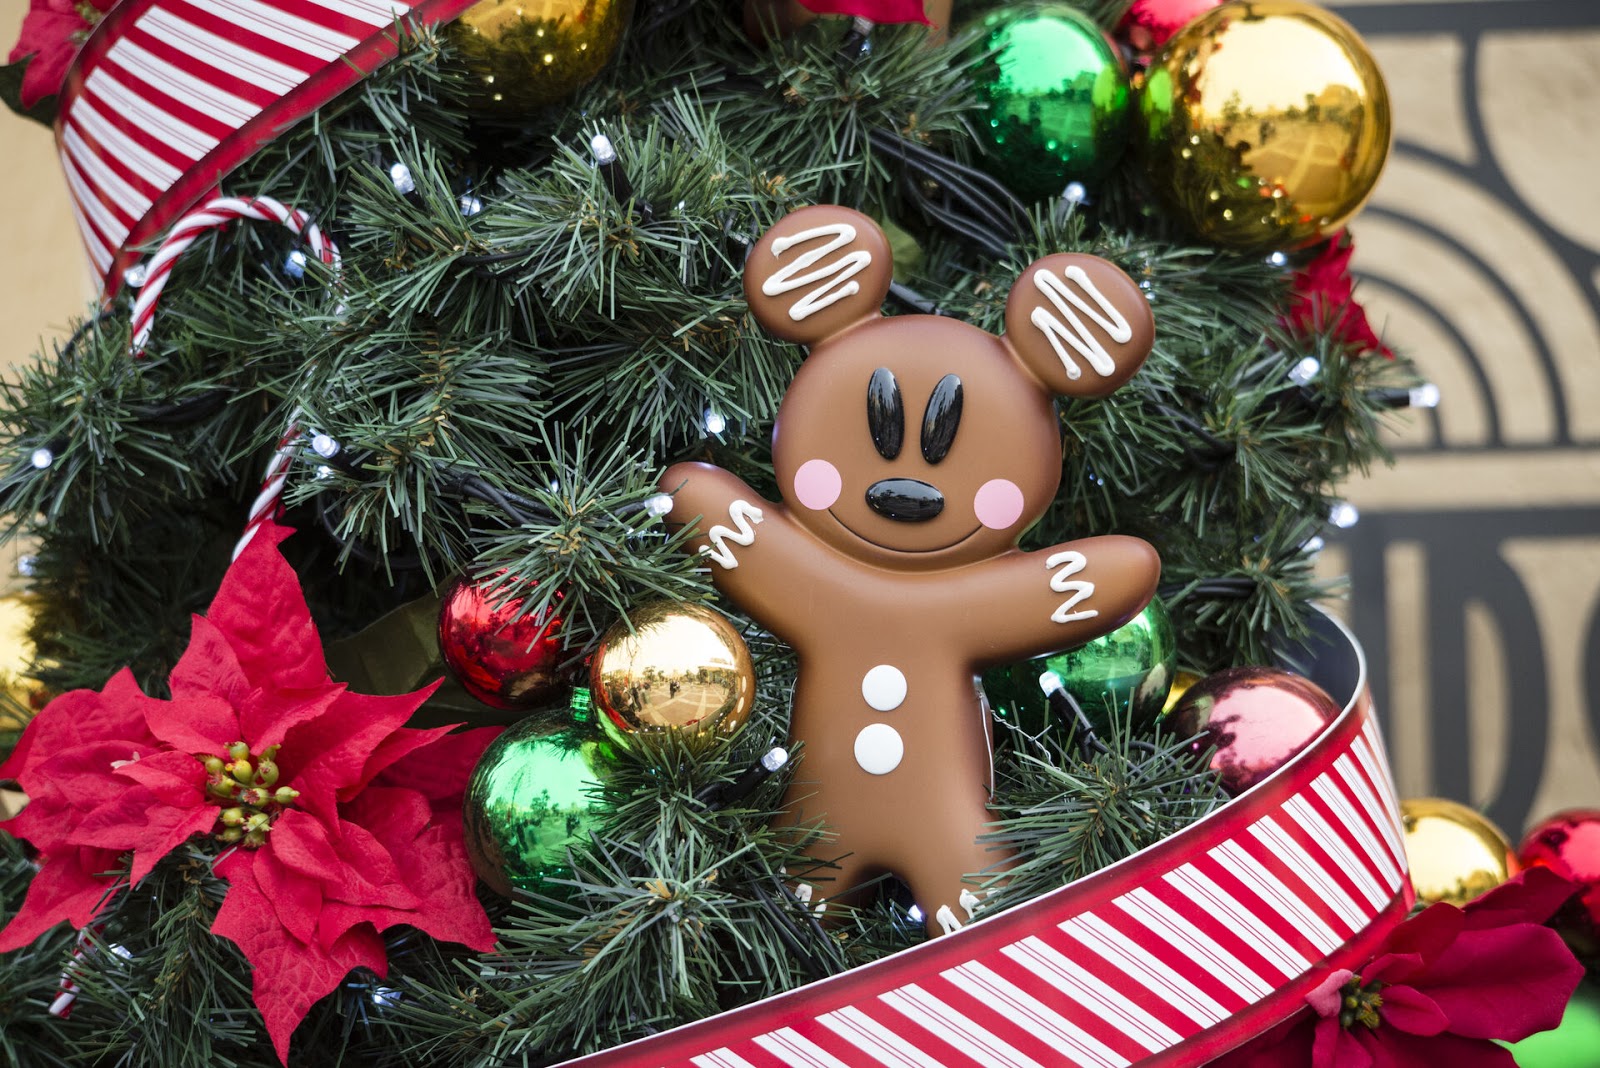 Disneyland Paris Announces Enchanted Christmas Details Including ...